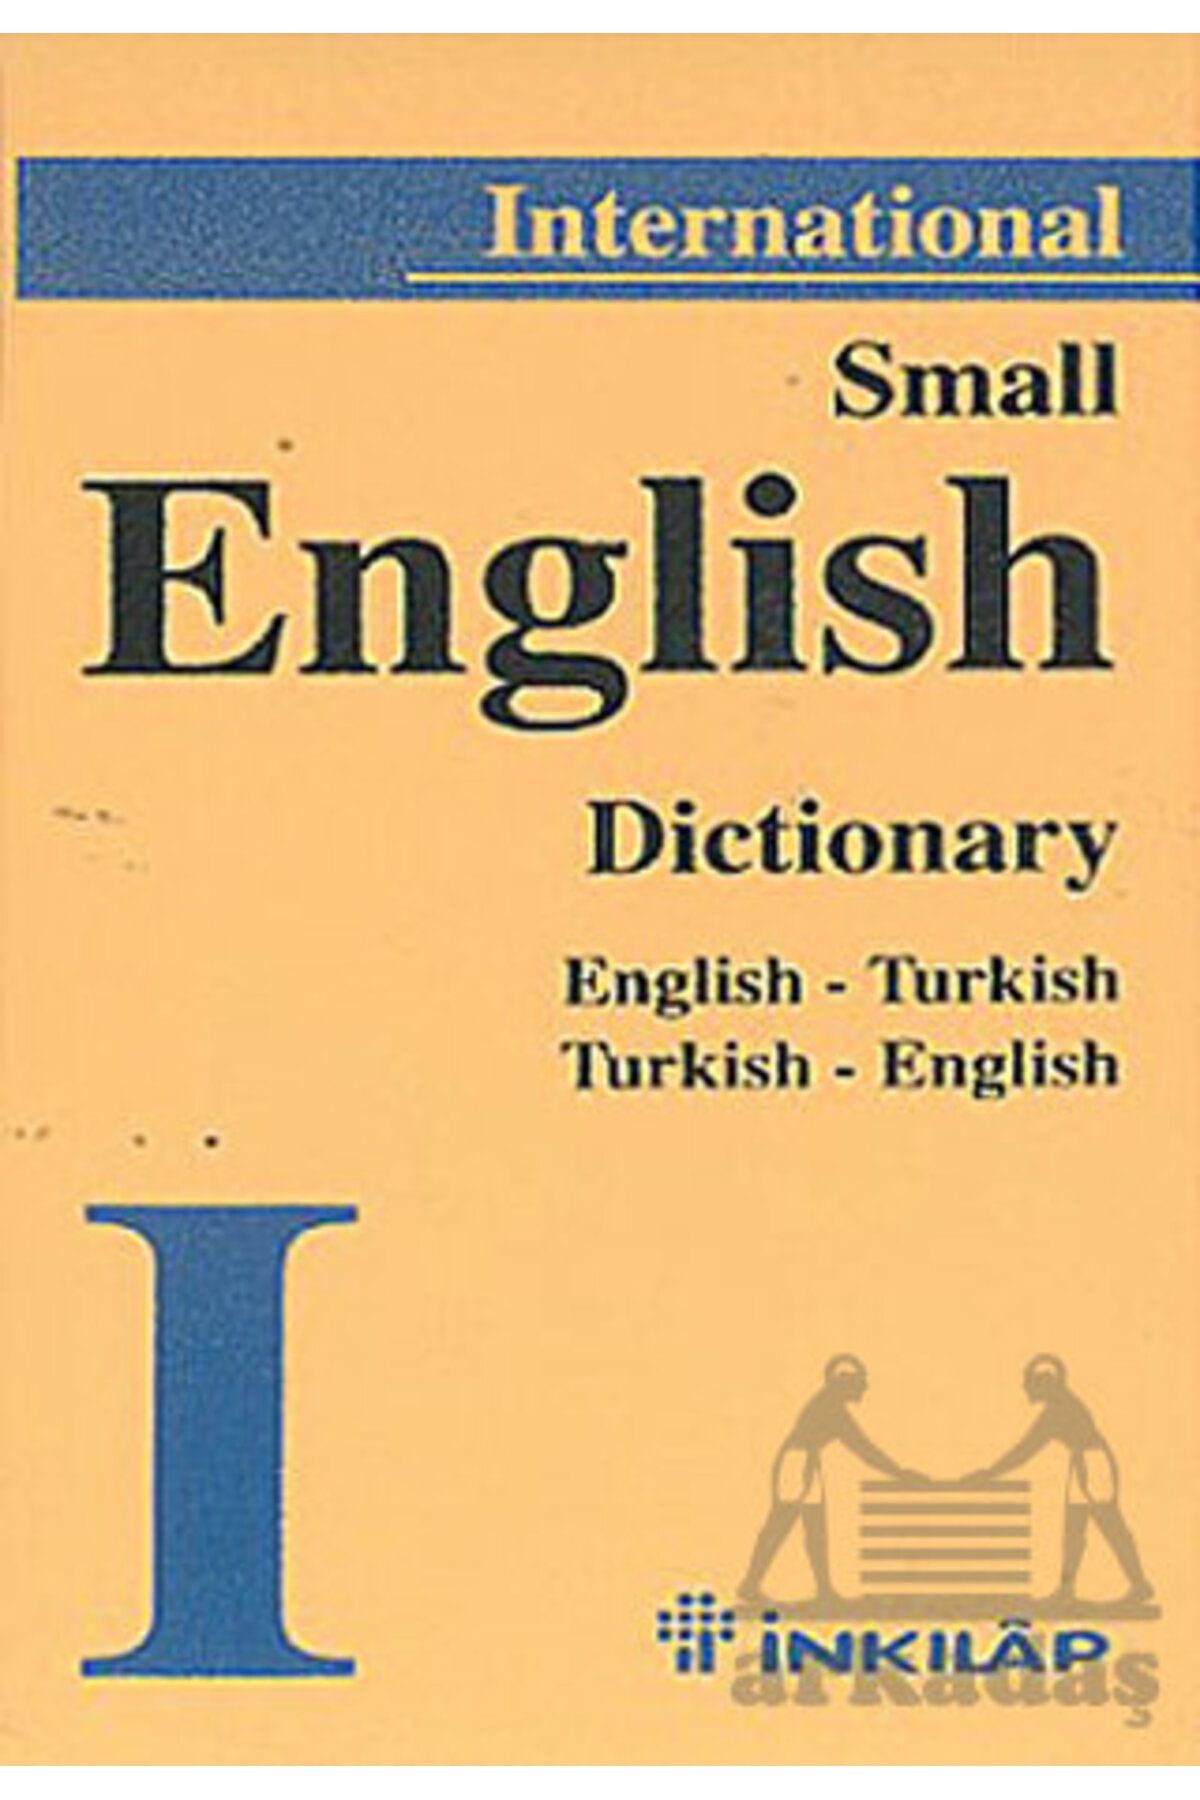 İnkılap Kitabevi International Small English Dictionary; English-Turkish Turkish-English